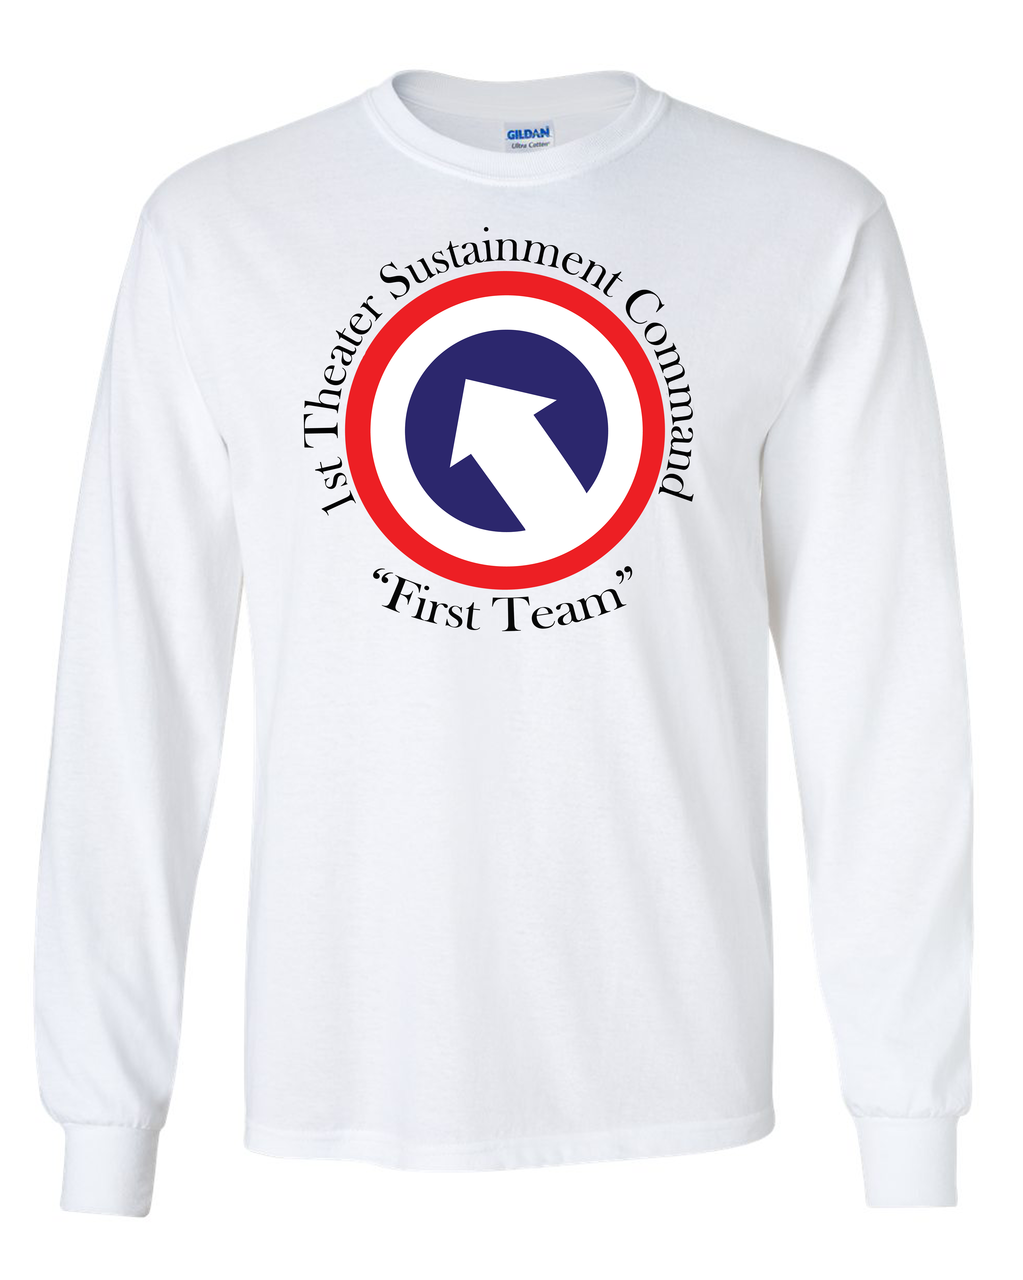 1st TSC Long-Sleeve Cotton T-Shirt